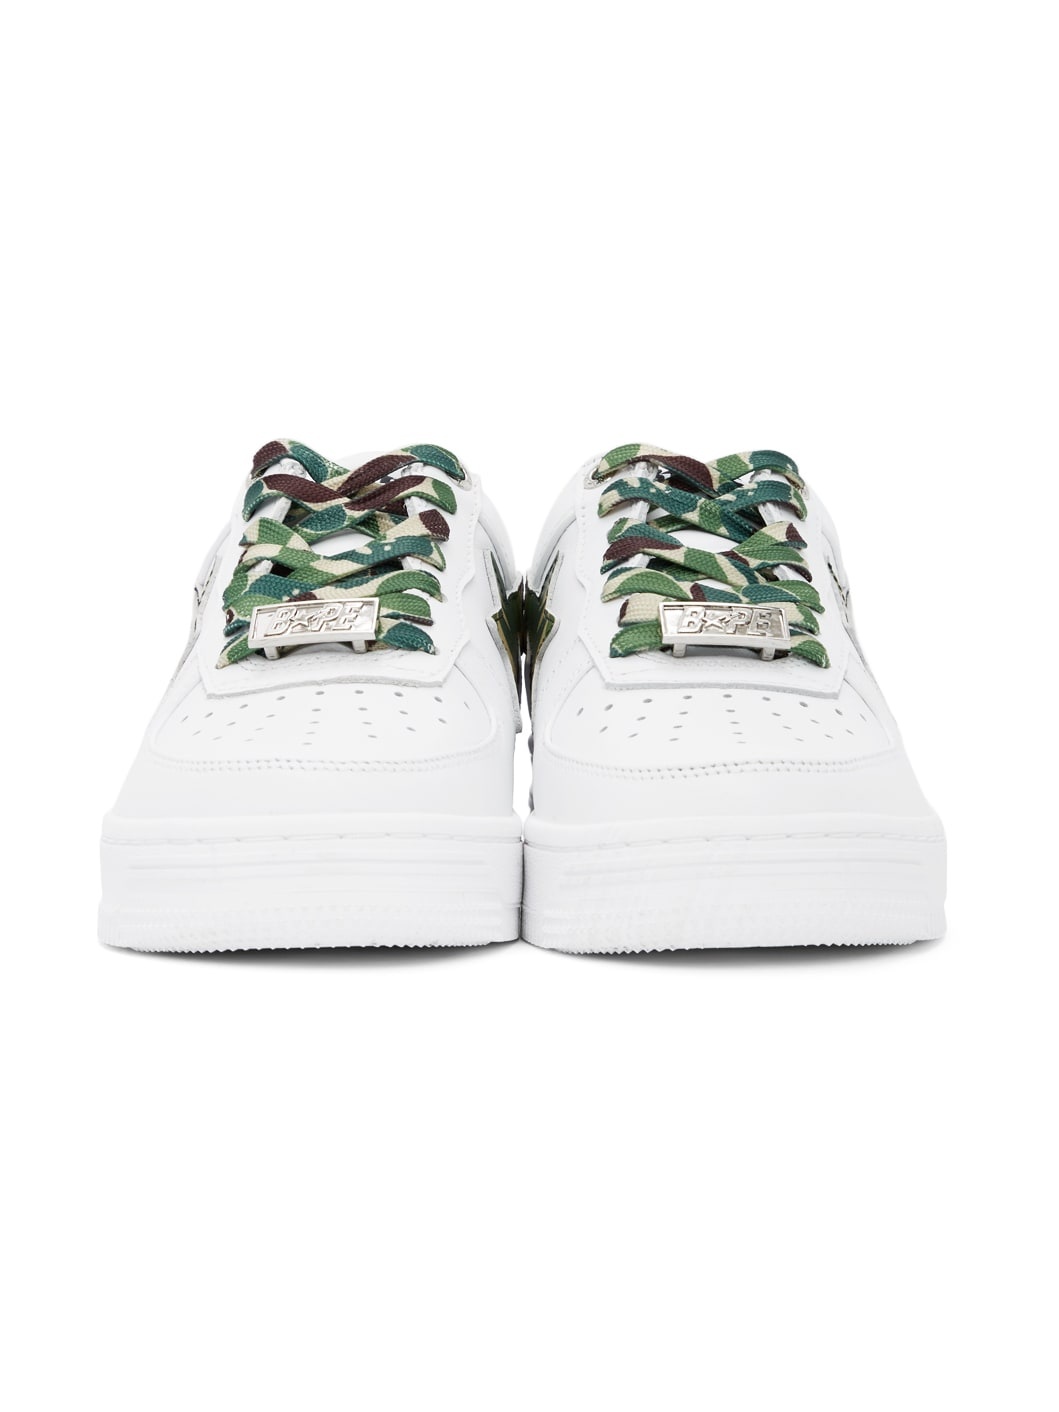 White & Green Camo Bapesta Low Sneakers - 2